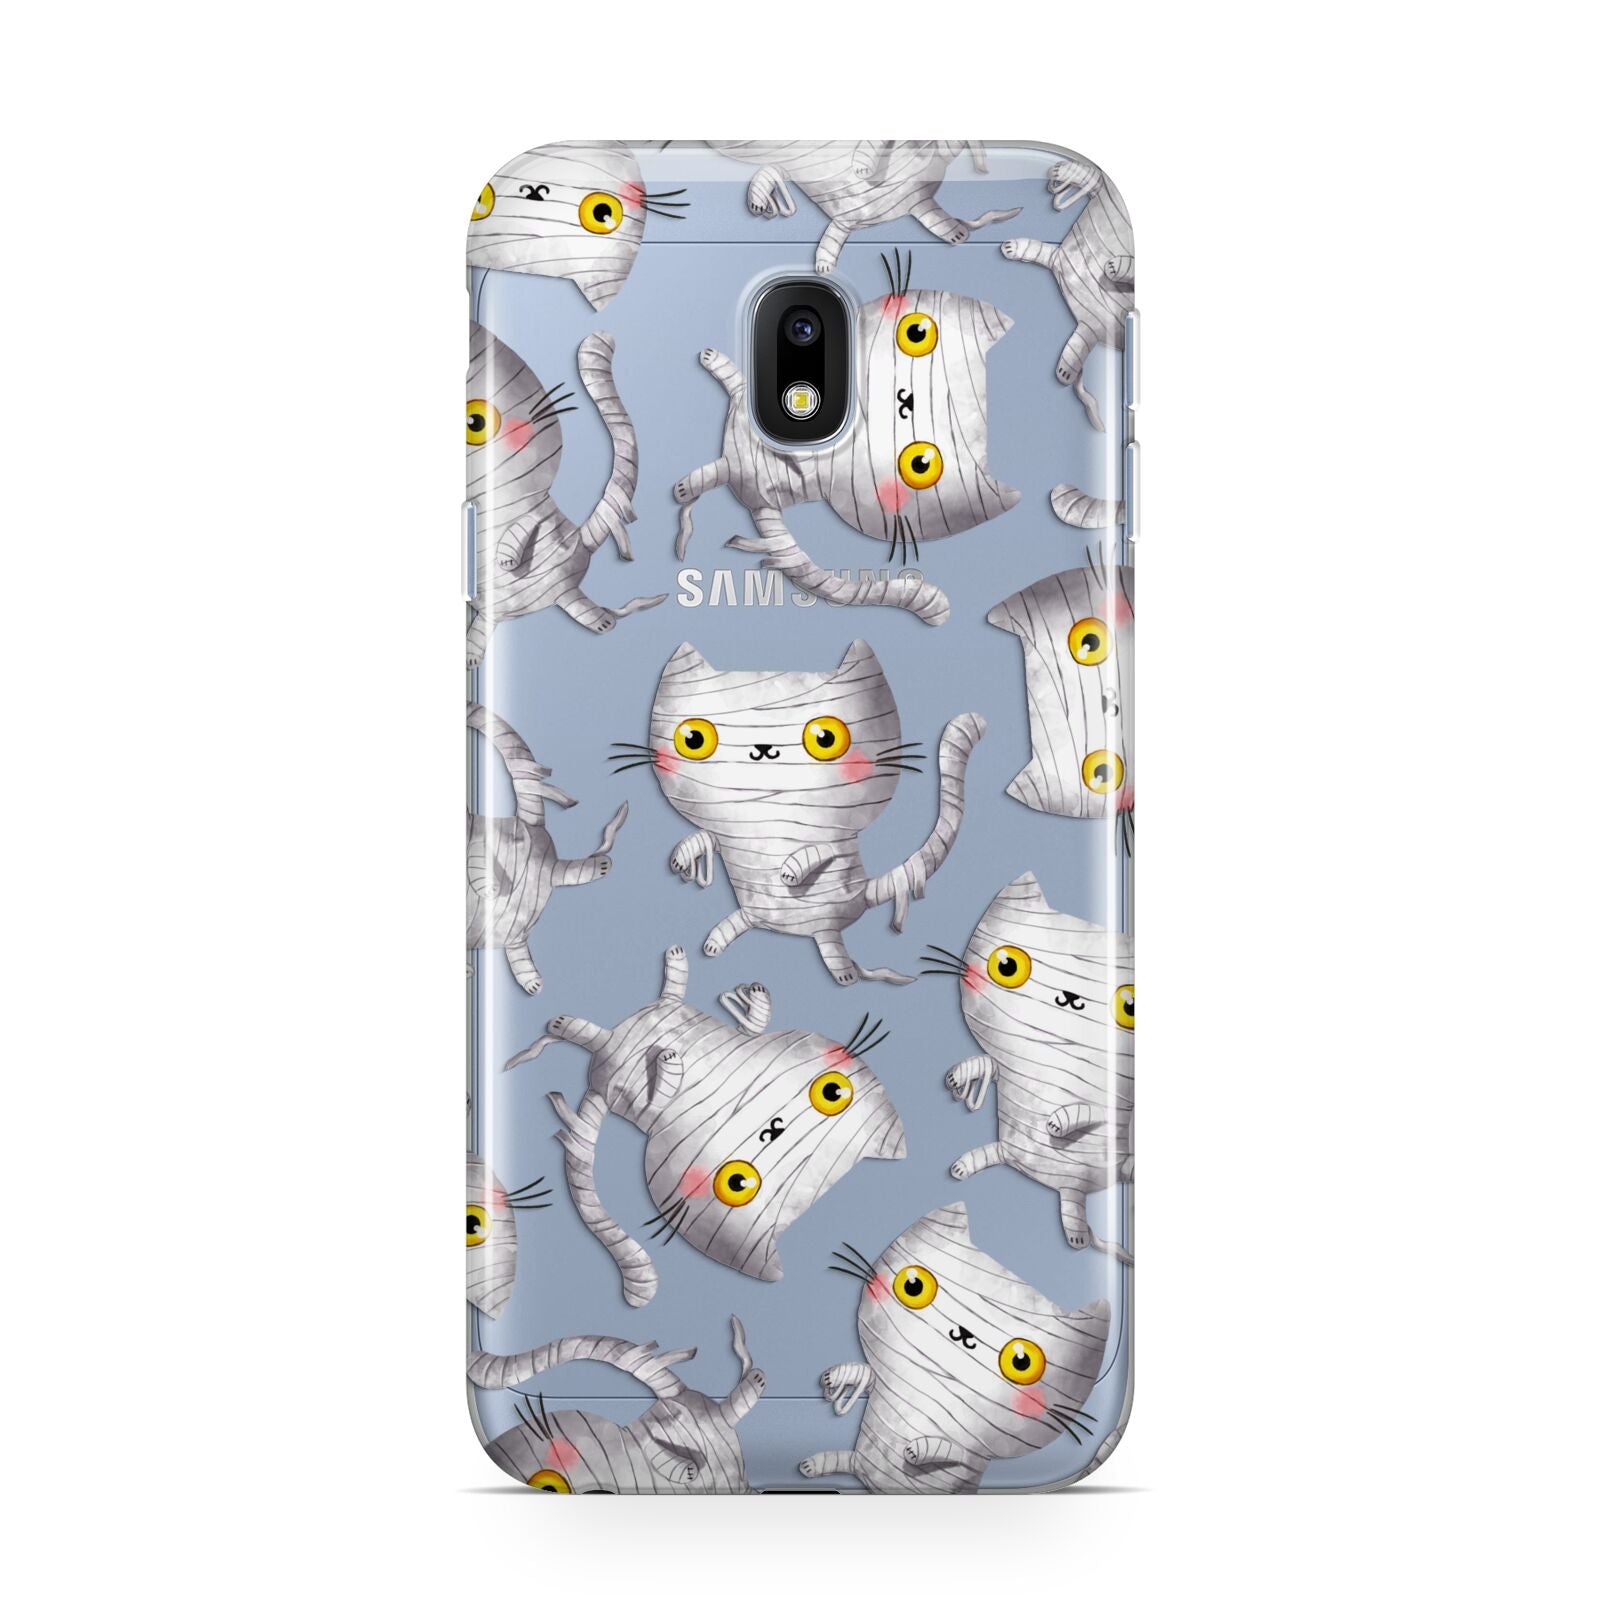 Mummy Cats Samsung Galaxy J3 2017 Case